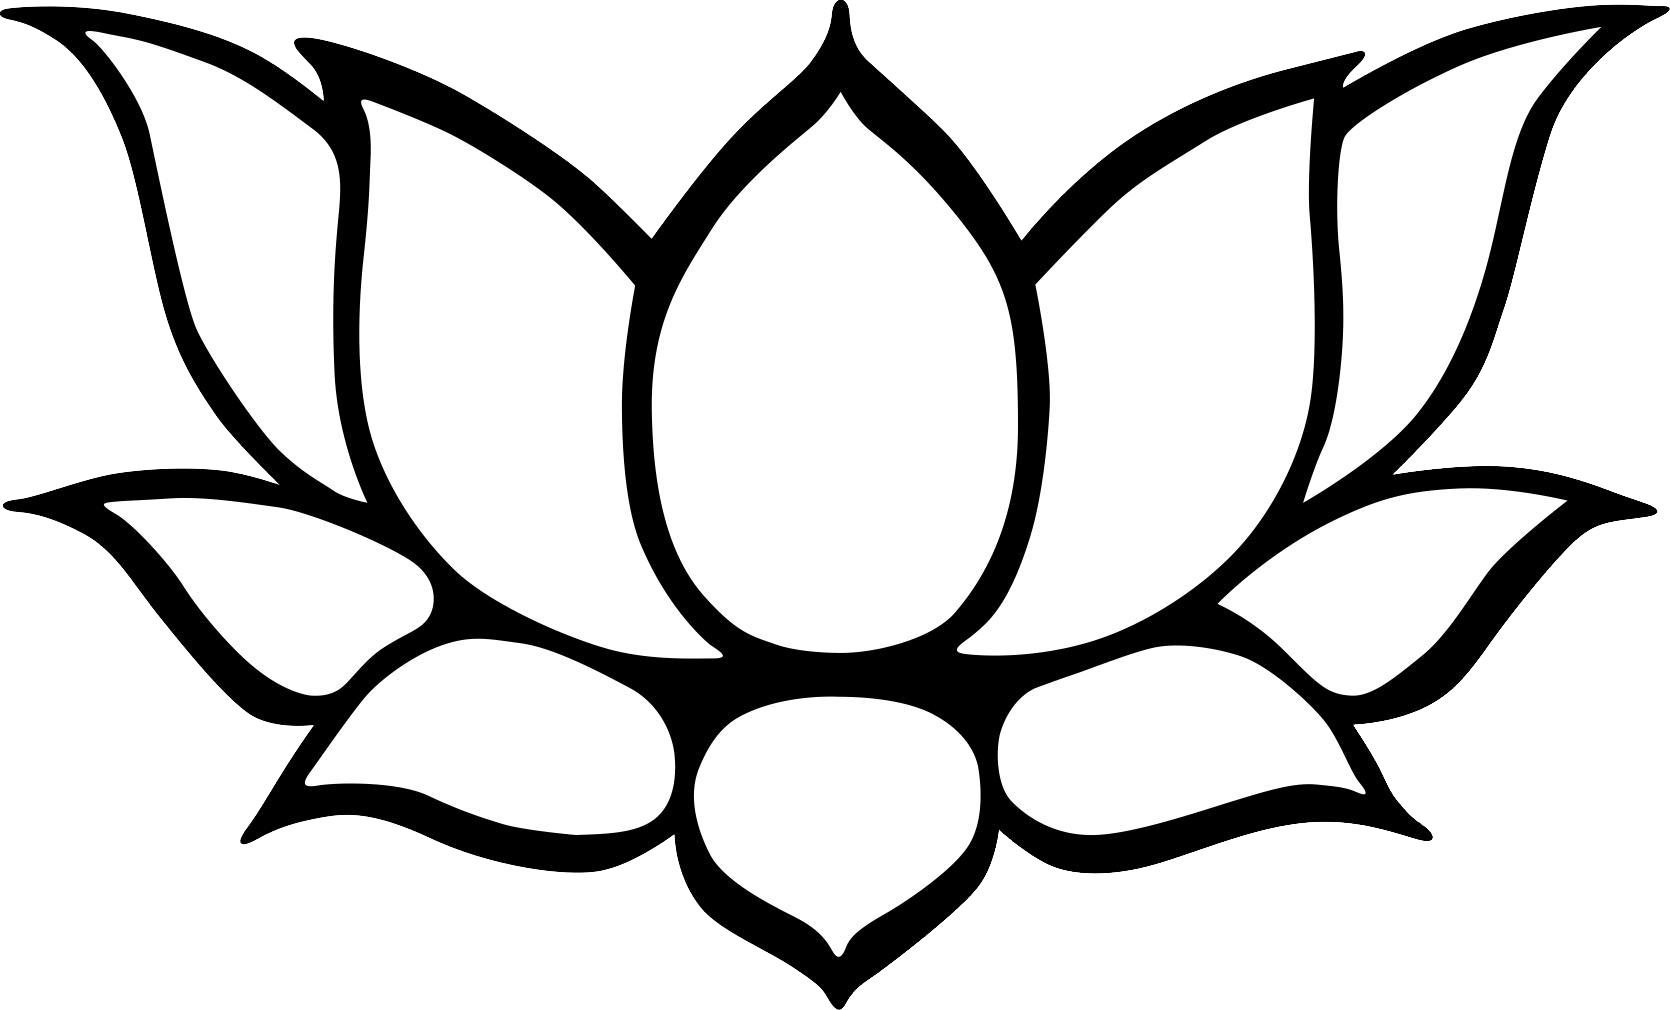 Free Lotus Flower Outline, Download Free Lotus Flower Outline png